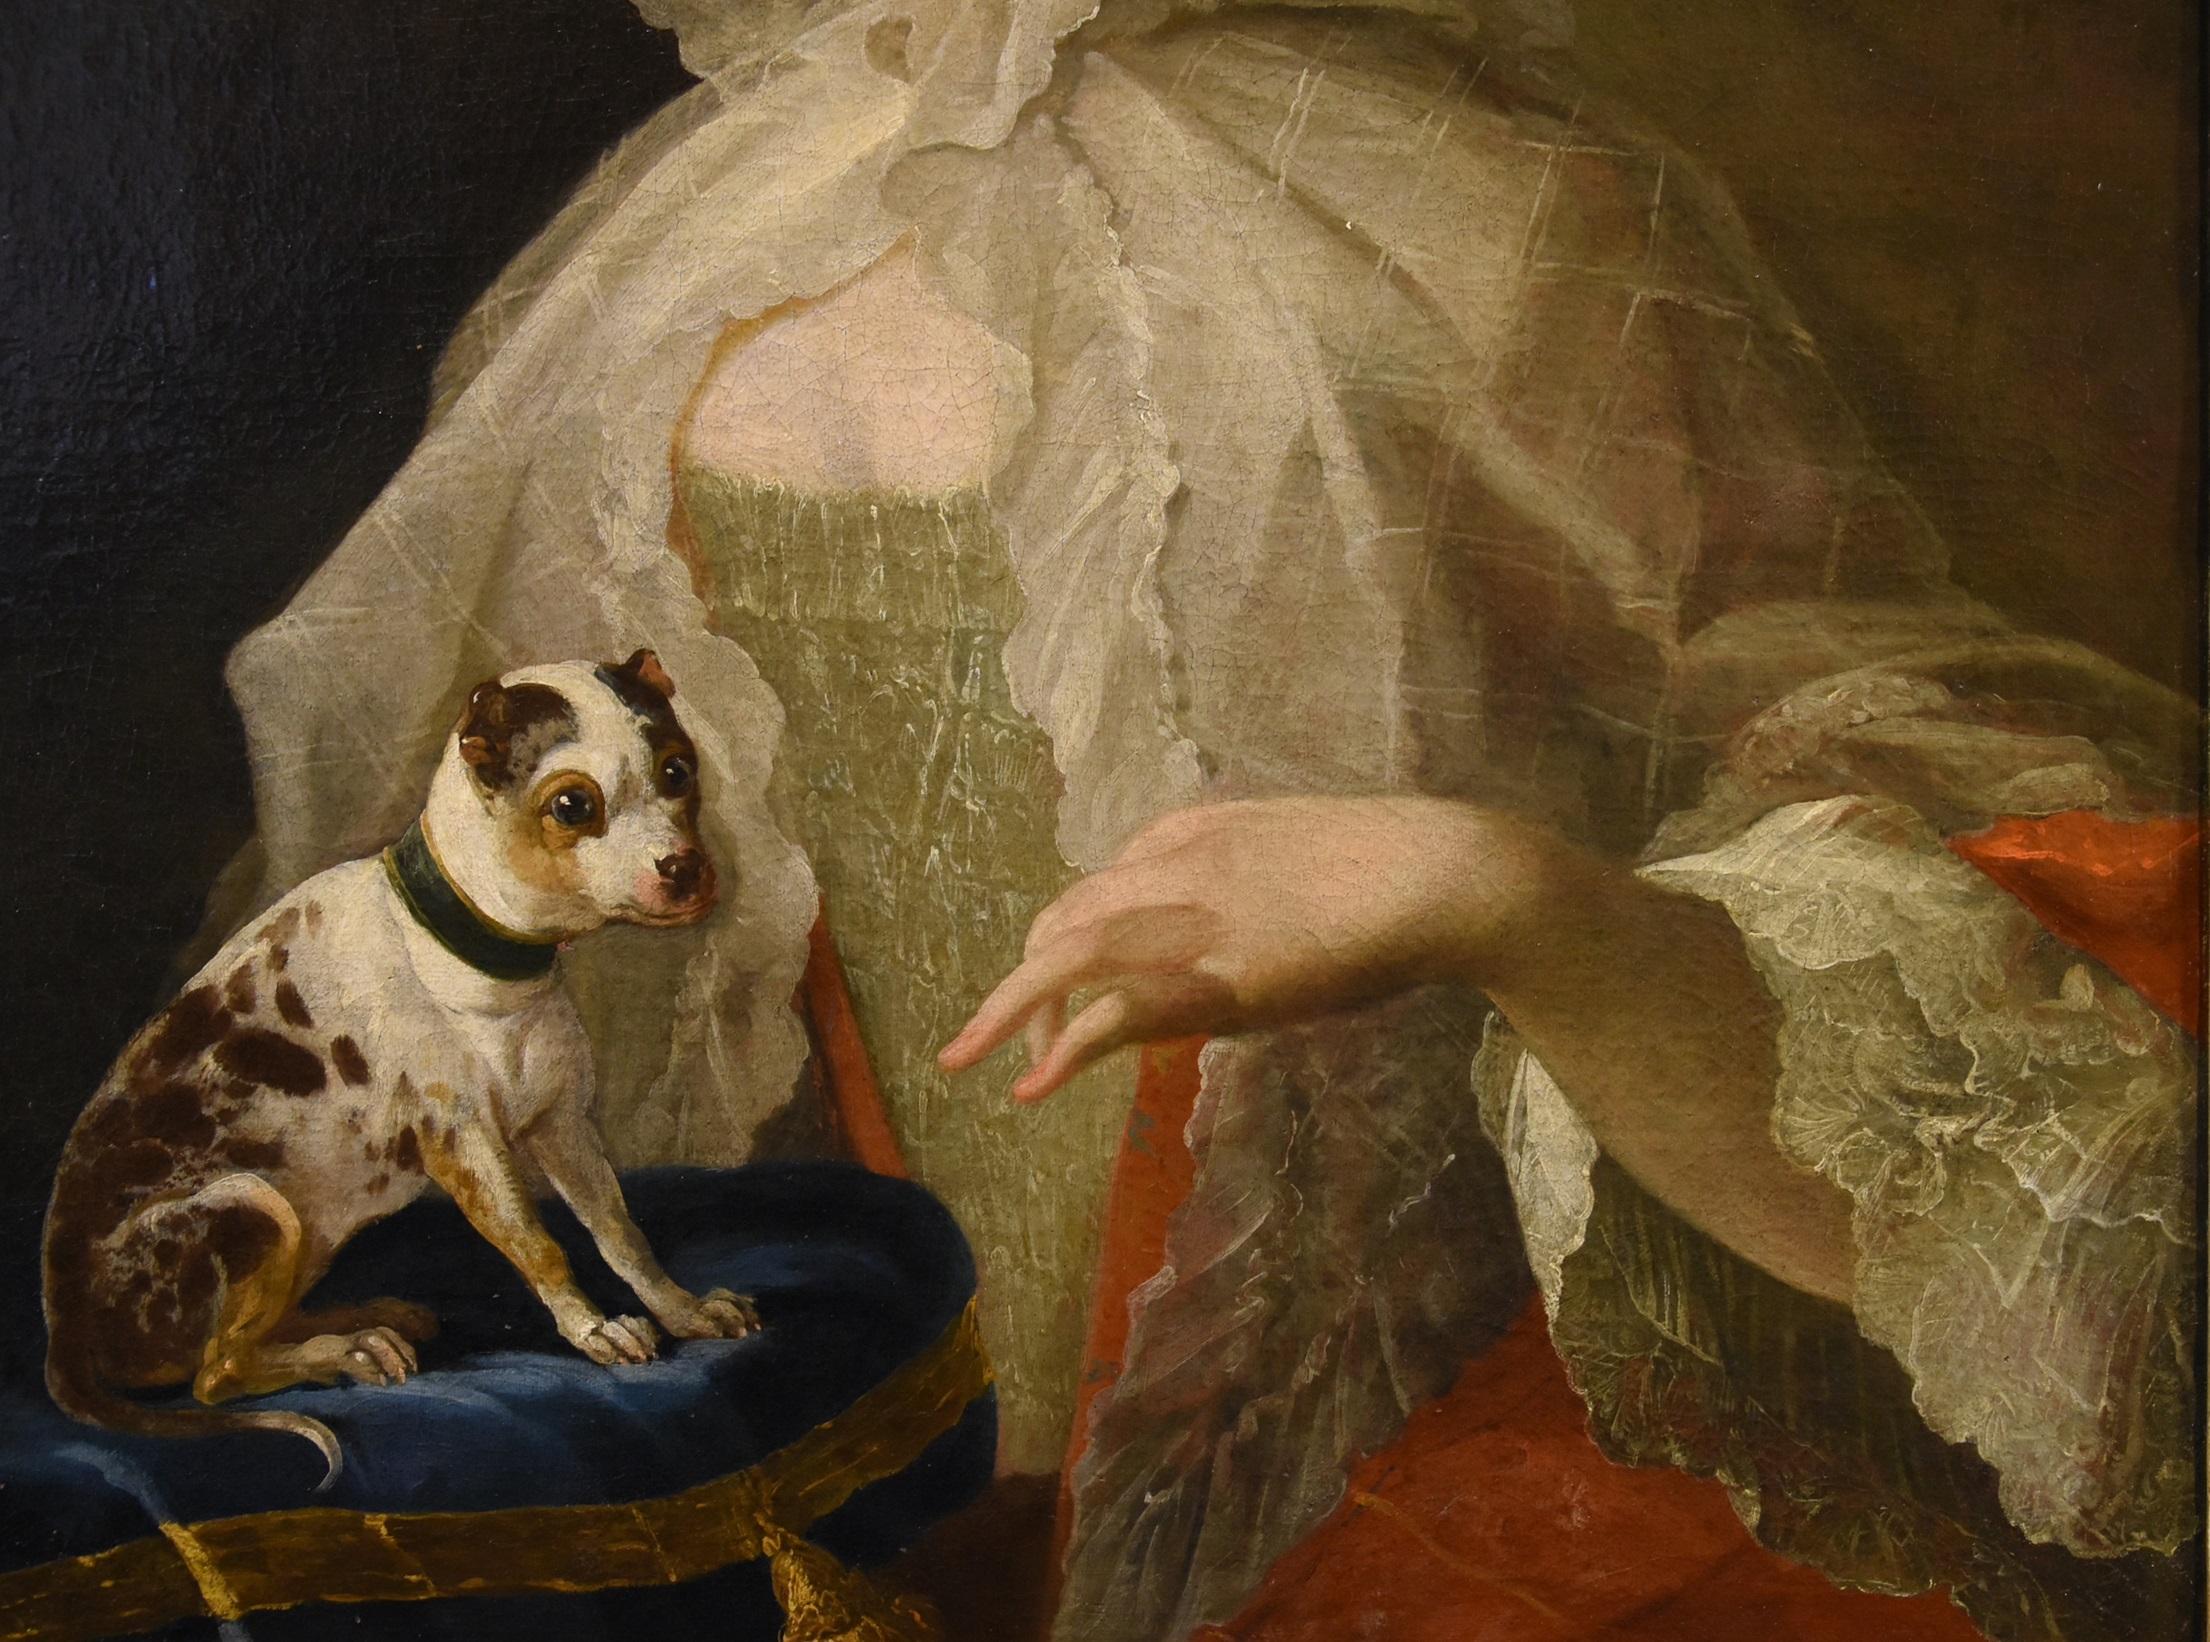 Louis Michel van Loo (Toulon 1707- Paris 1771) attributable
Portrait of a noblewoman with her little dog
Oil on canvas (79 x 66 cm. - with frame 92 x 78 cm.) 

A qualitative portrait depicting an elegant noblewoman of French origin, presumably